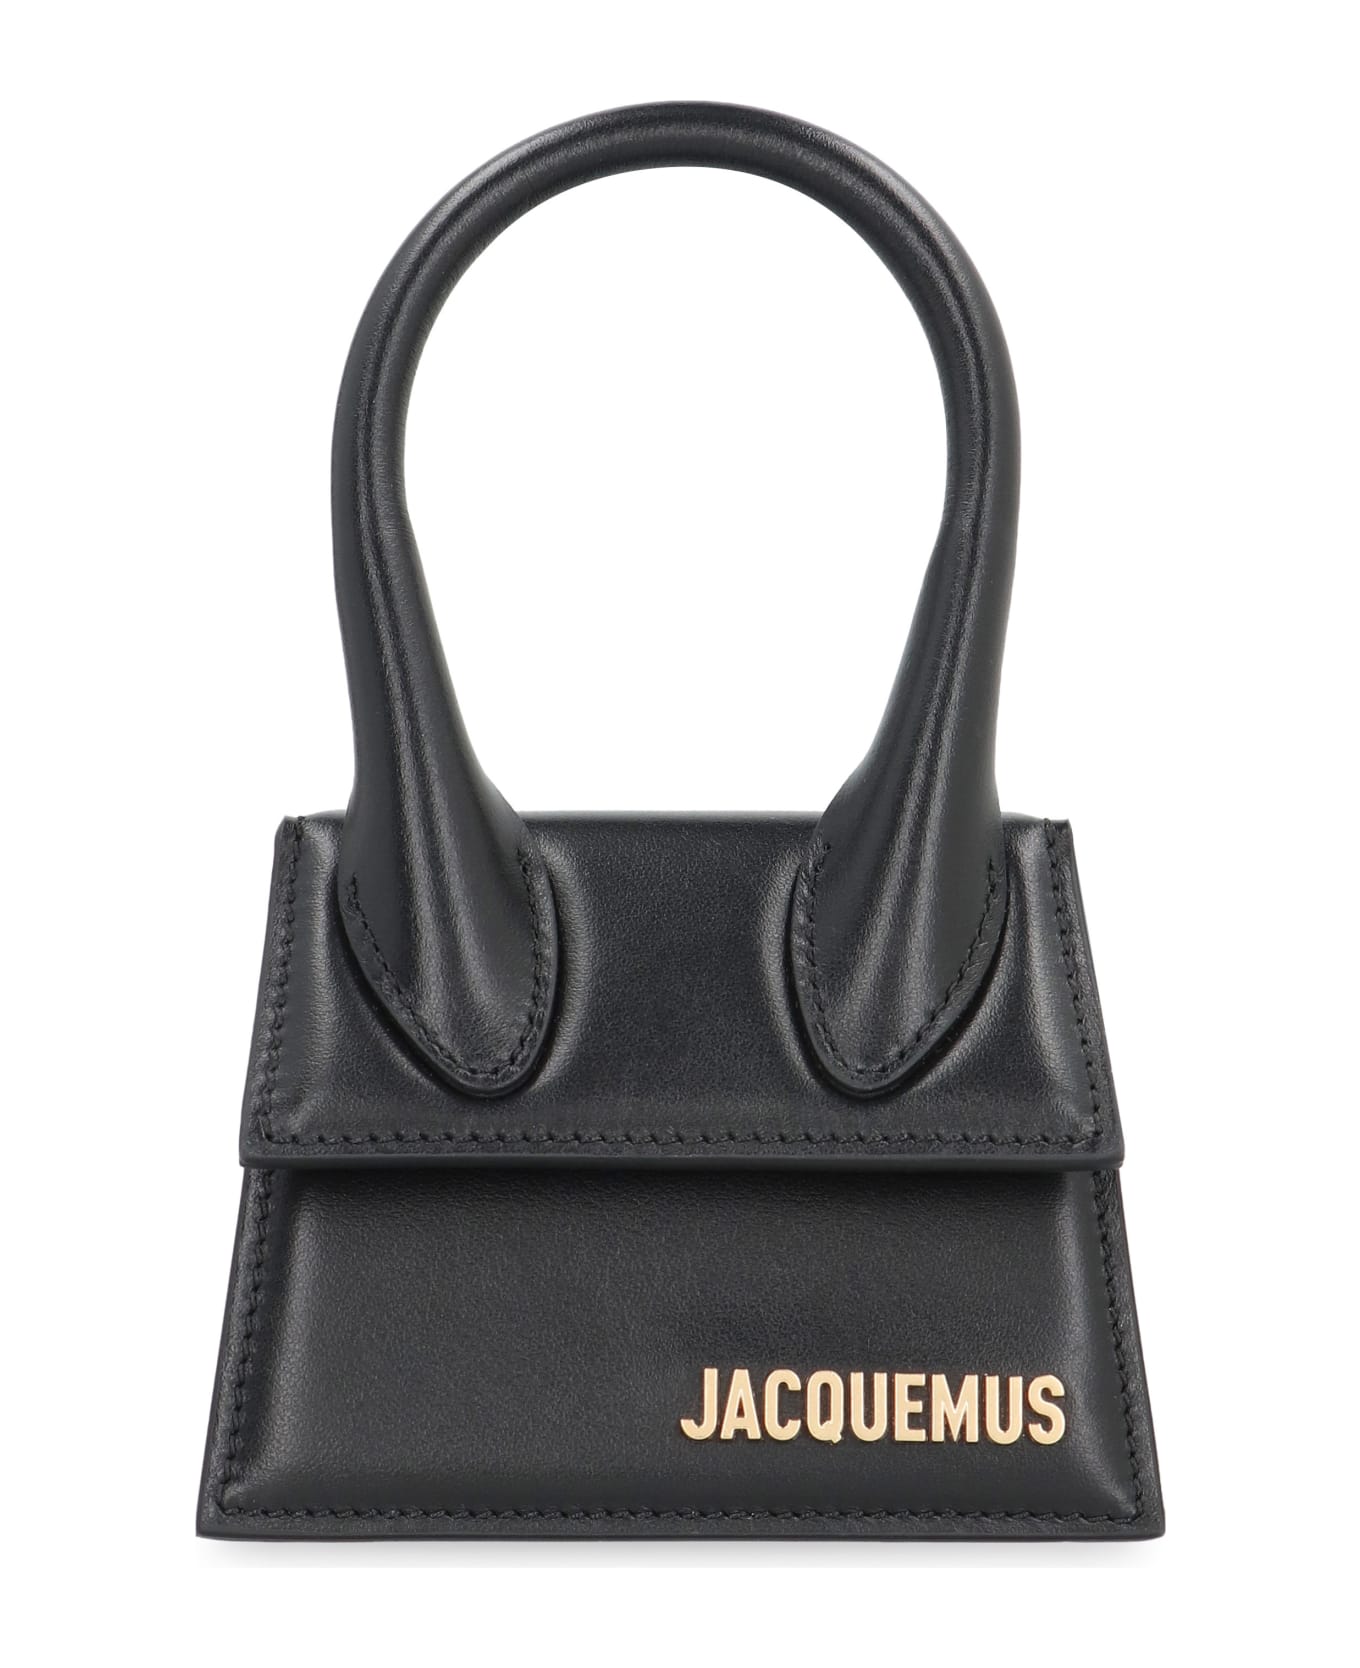 Jacquemus Le Chiquito Leather Handbag - black